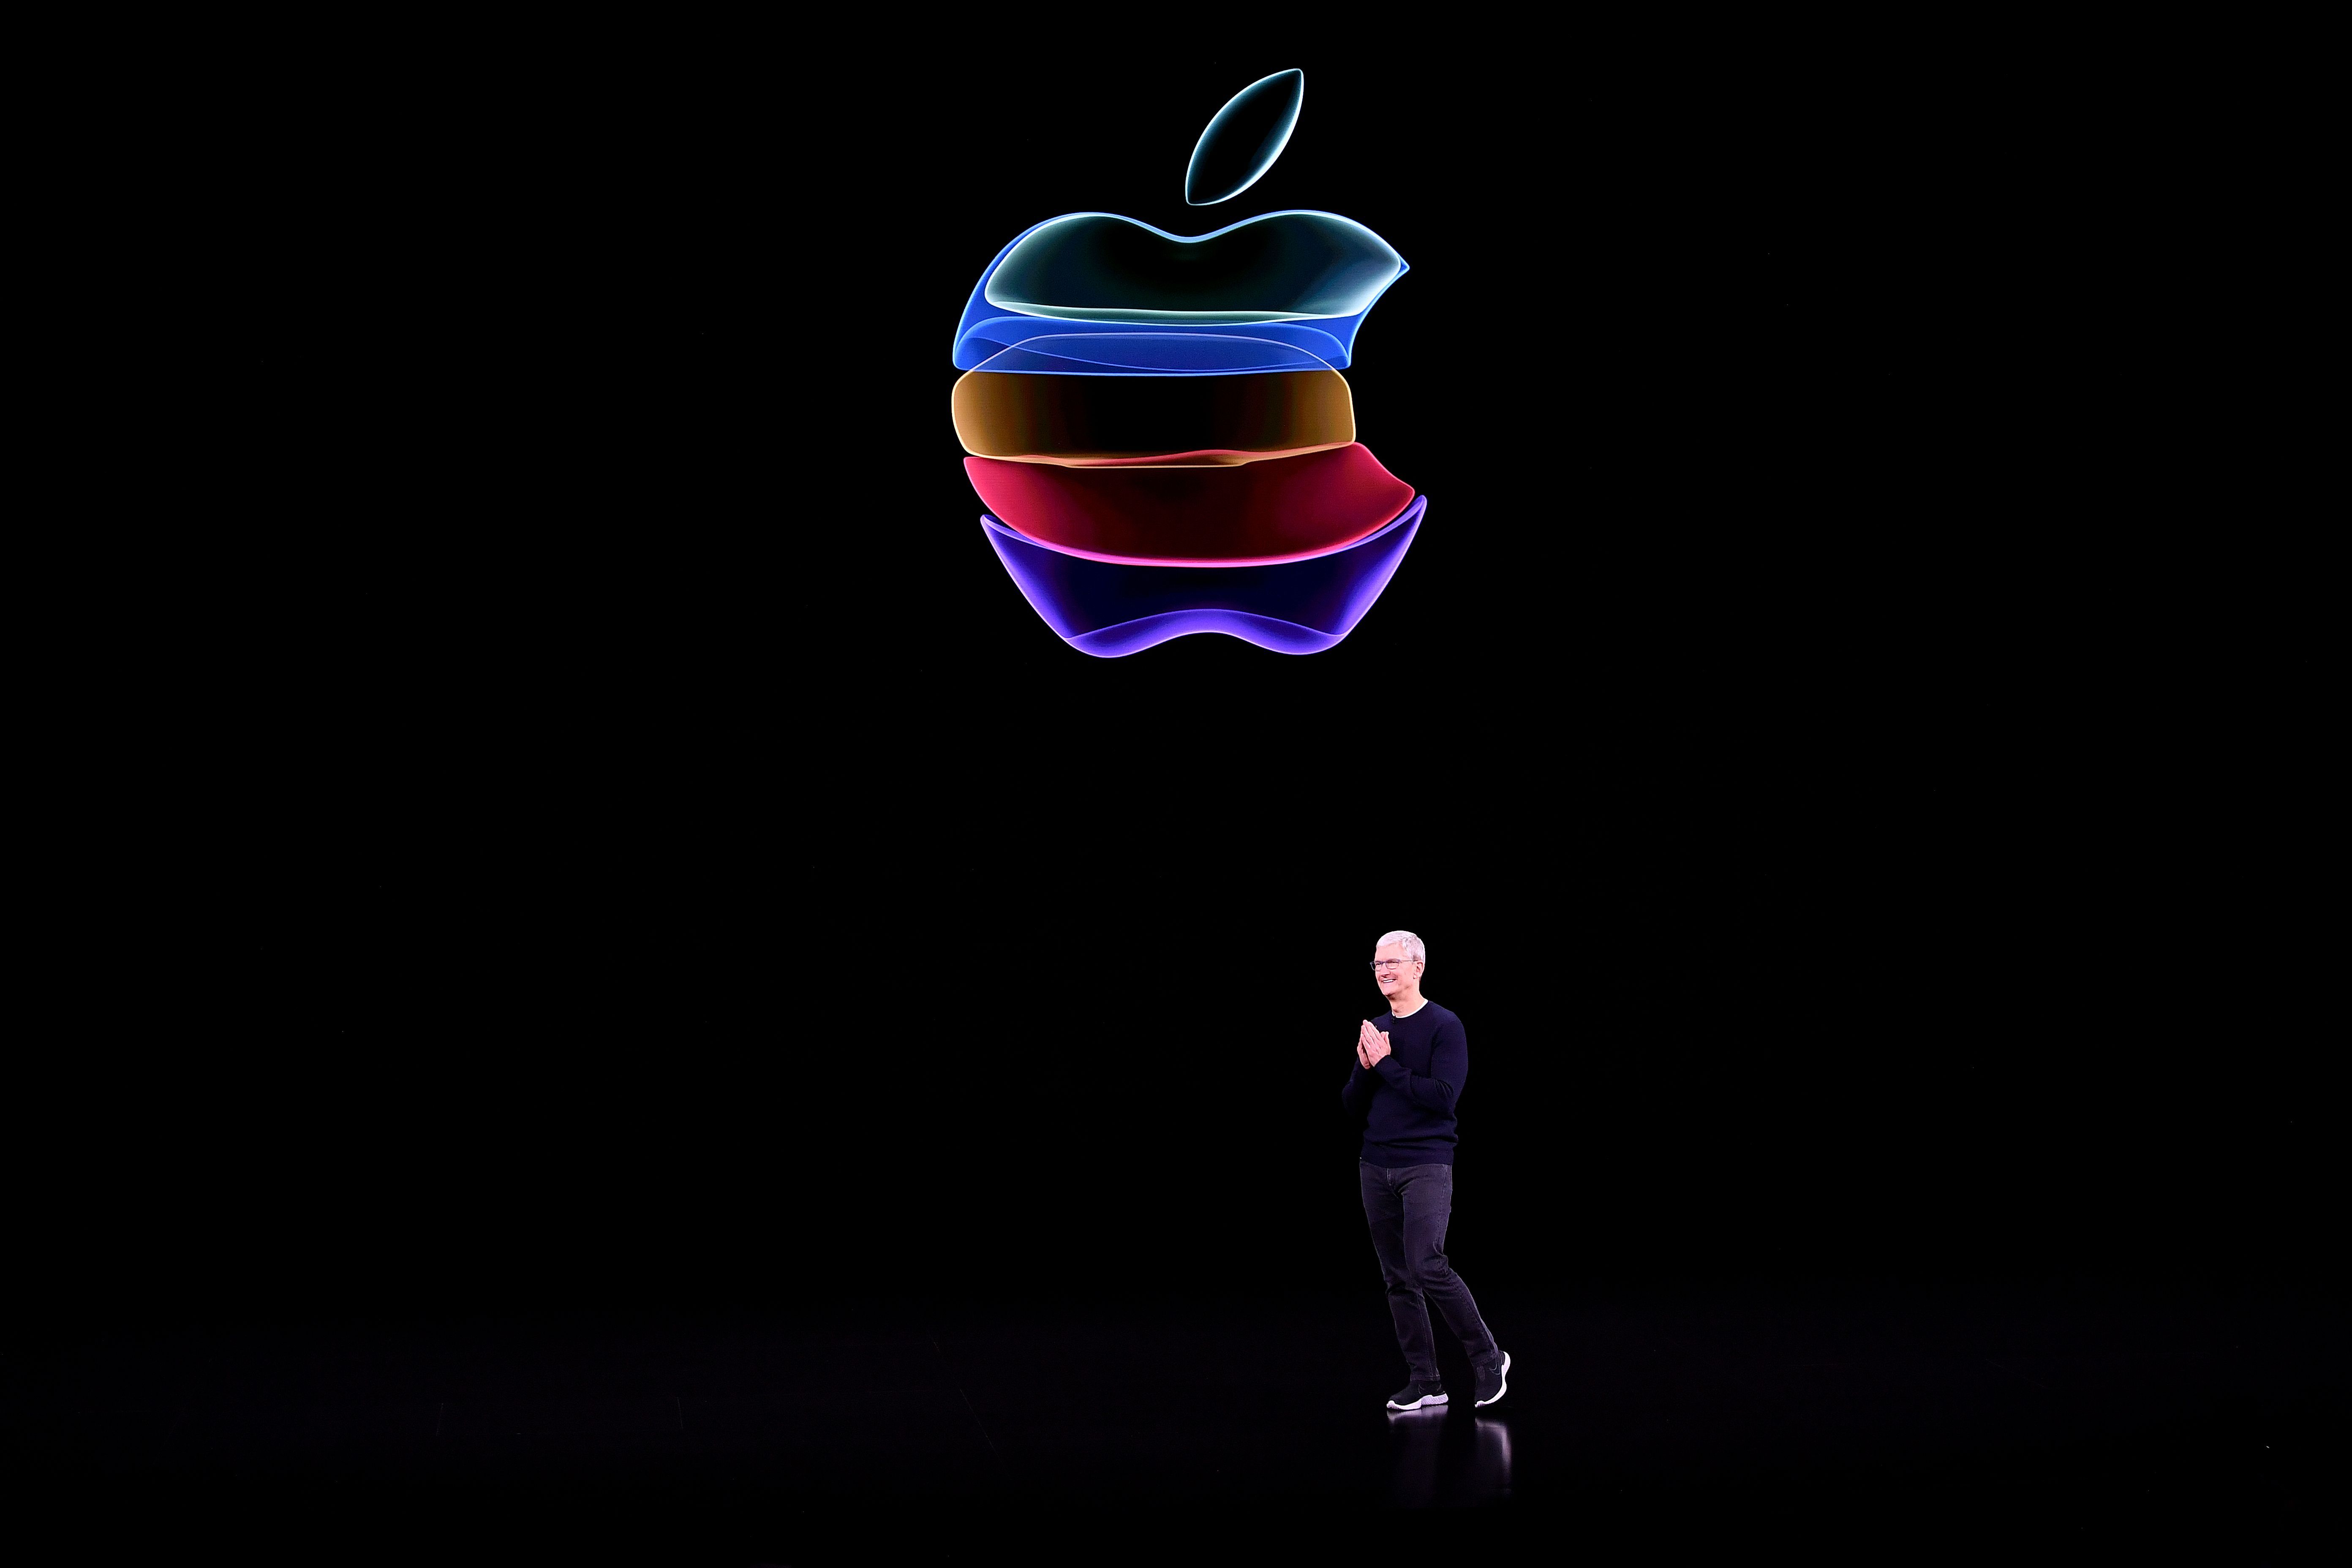 apple keynote